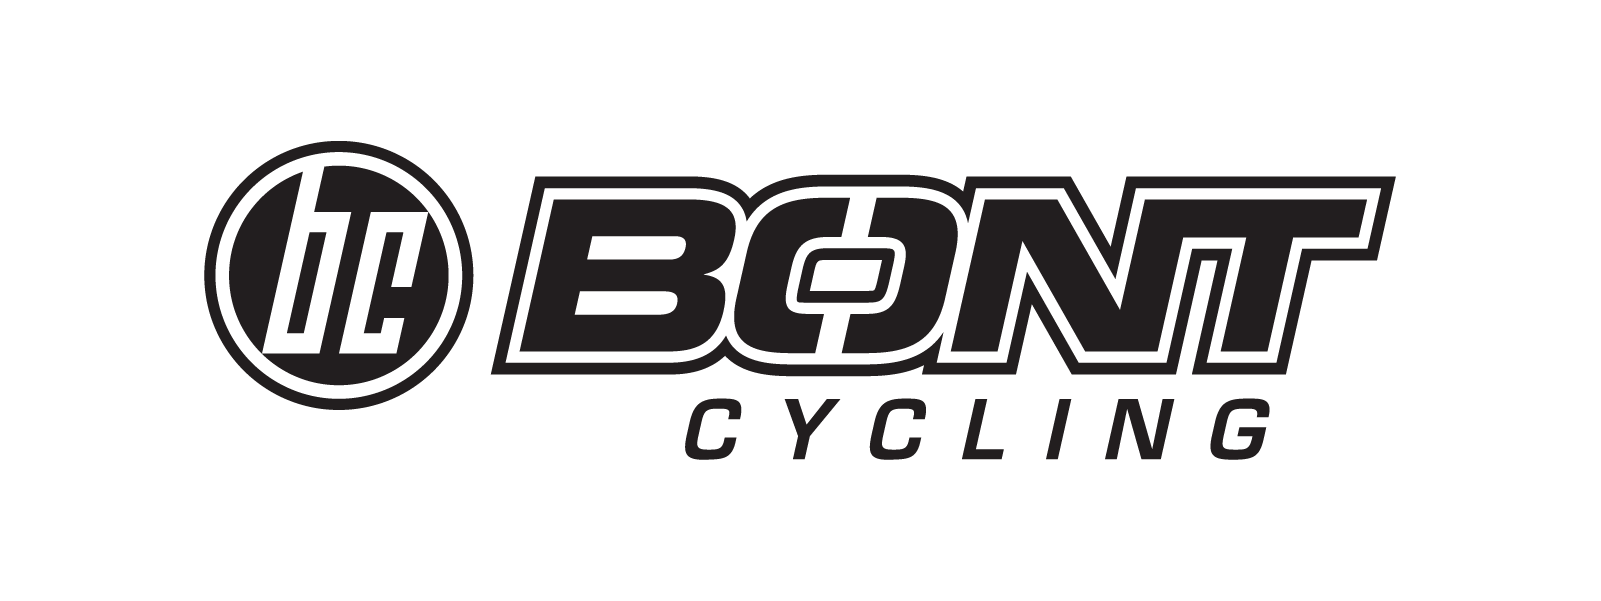 BONT JP - BONT Cycling - ボントサイクリング